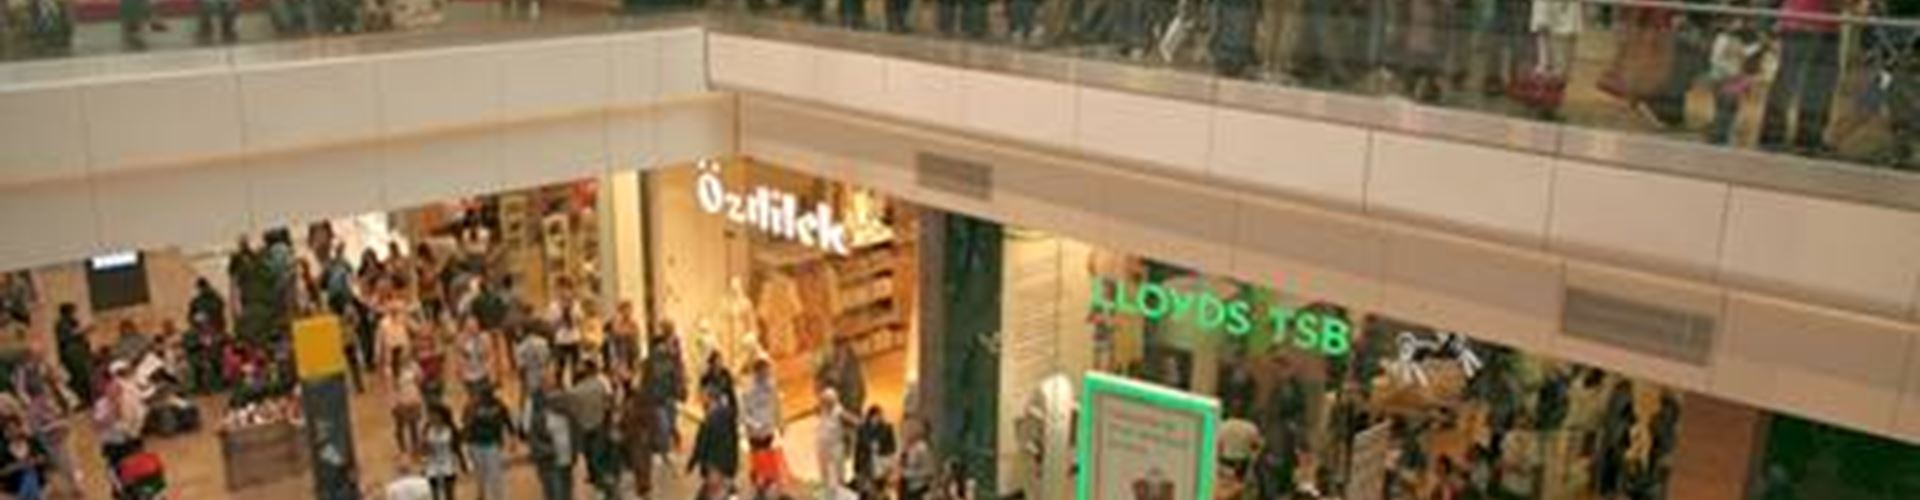 CBI reports UK retail sales growth strongest since 1988